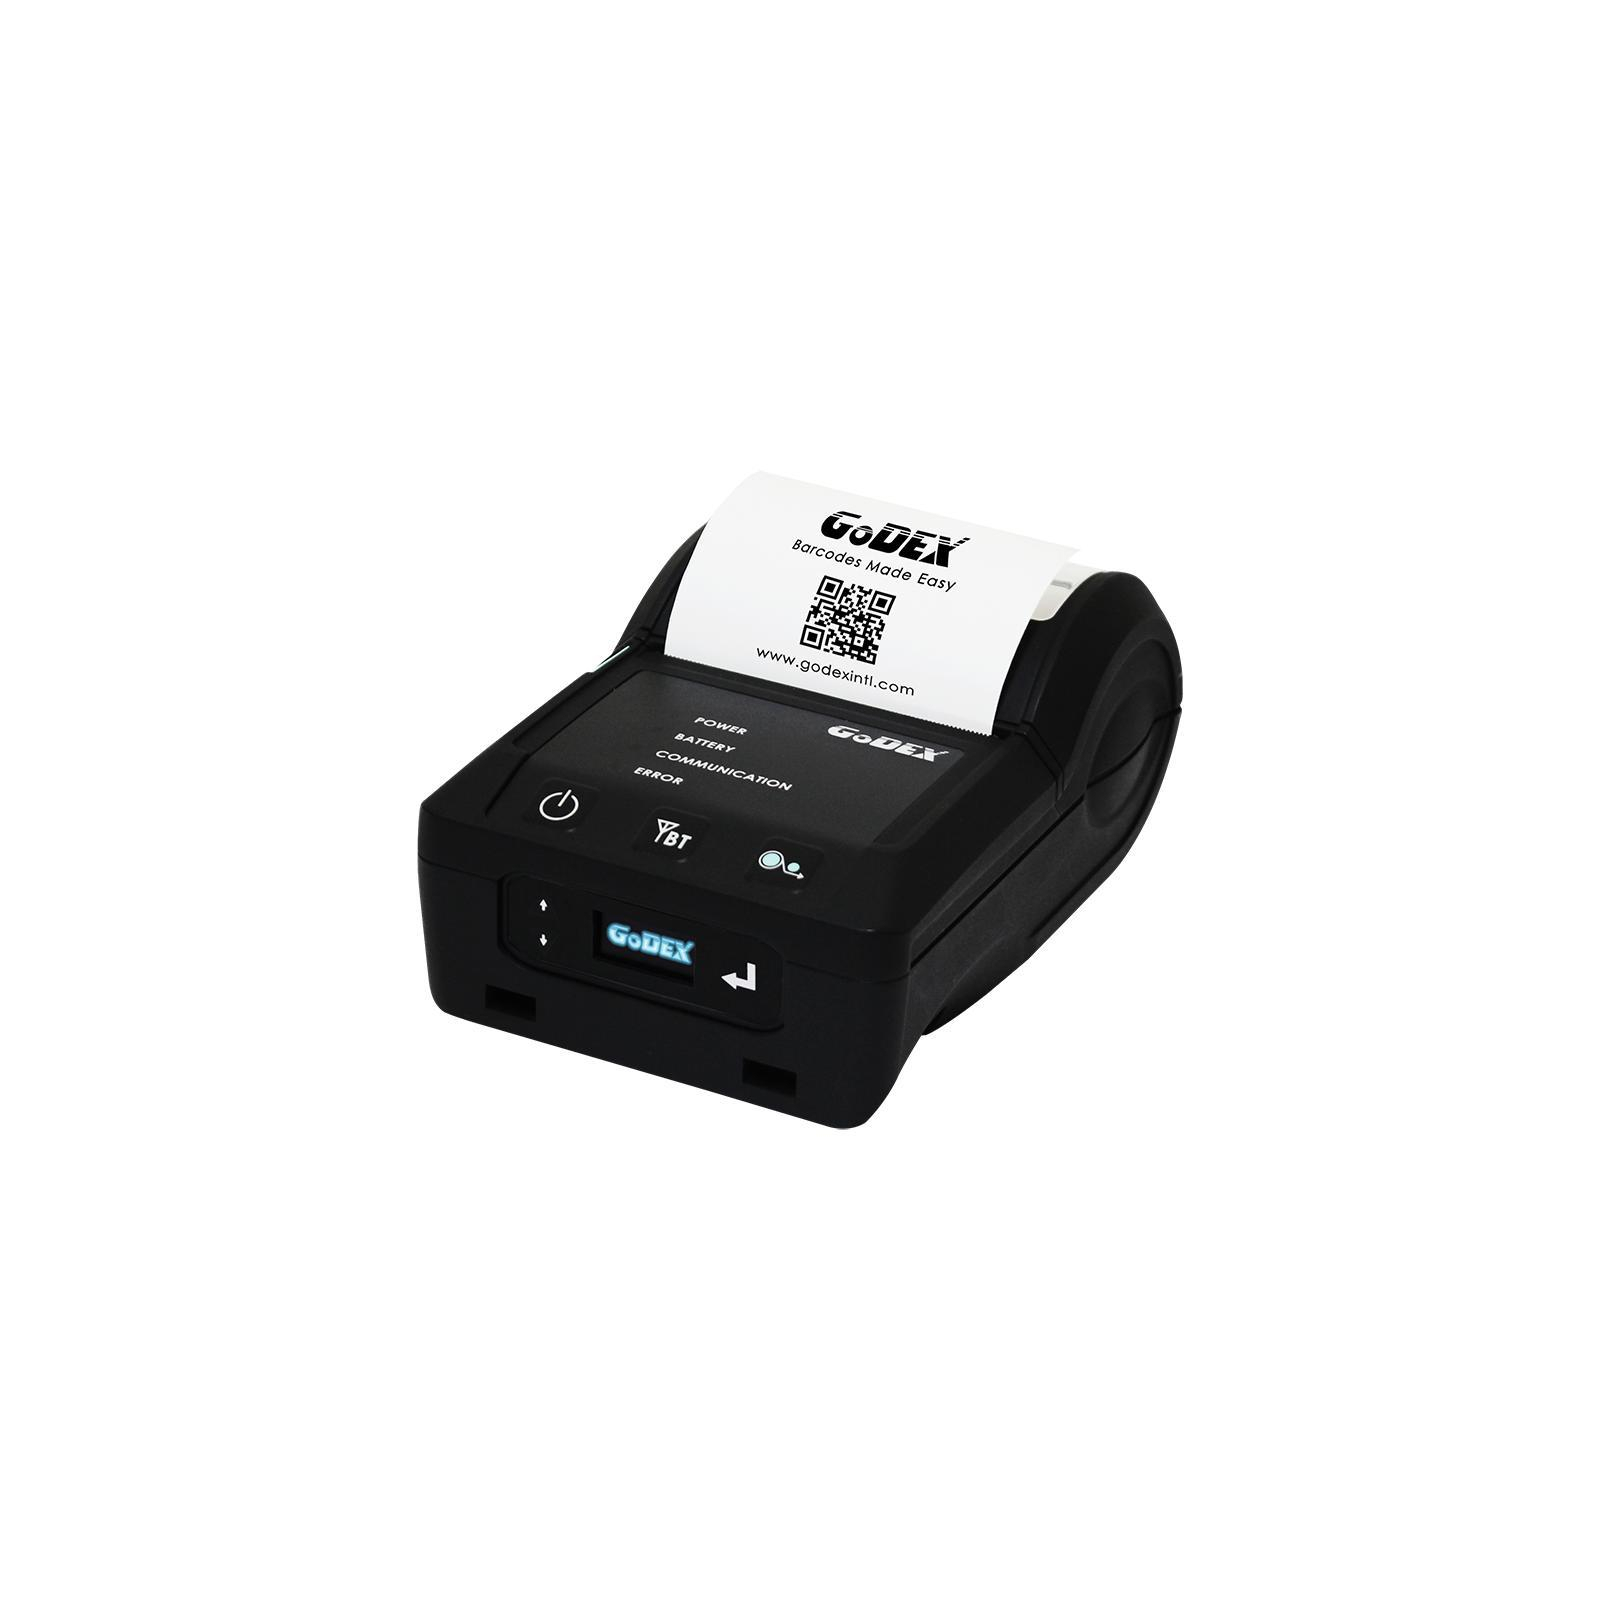 Принтер етикеток Godex MX30i BT, USB (12248)